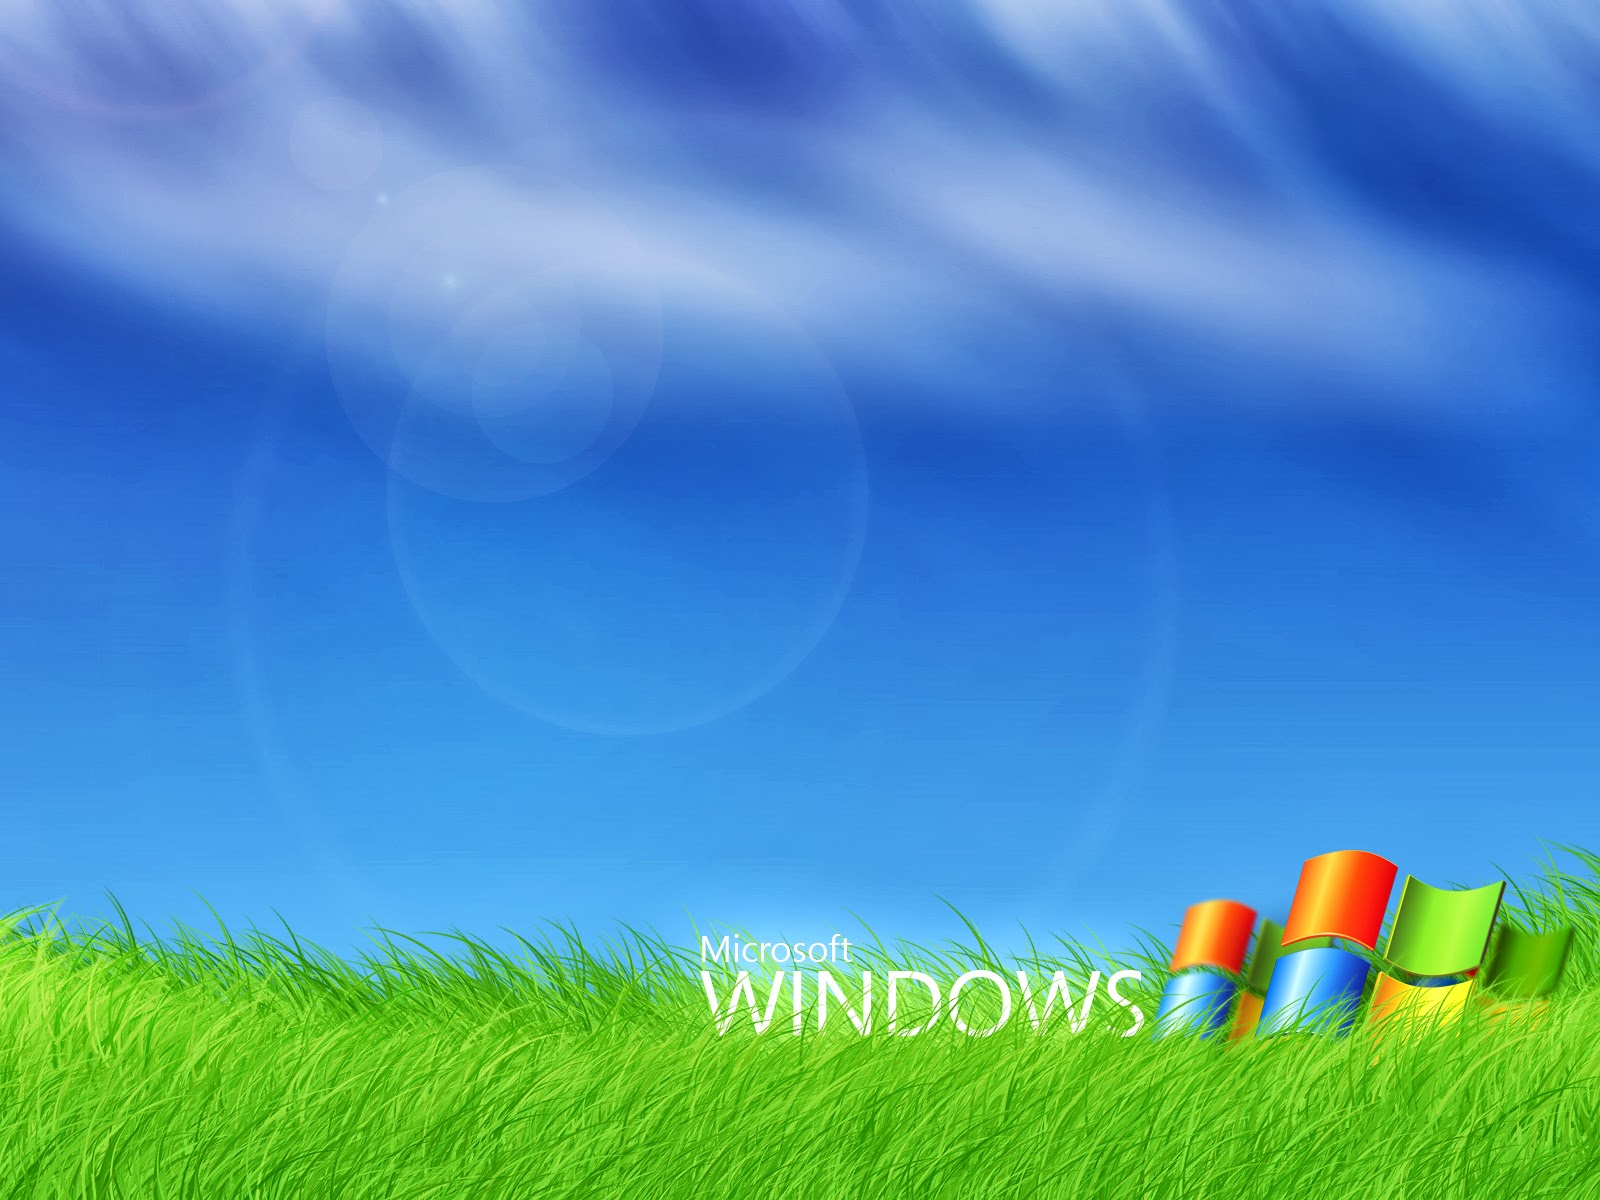 Microsoft Windows Wallpaper Free Wallpaper Screensaver